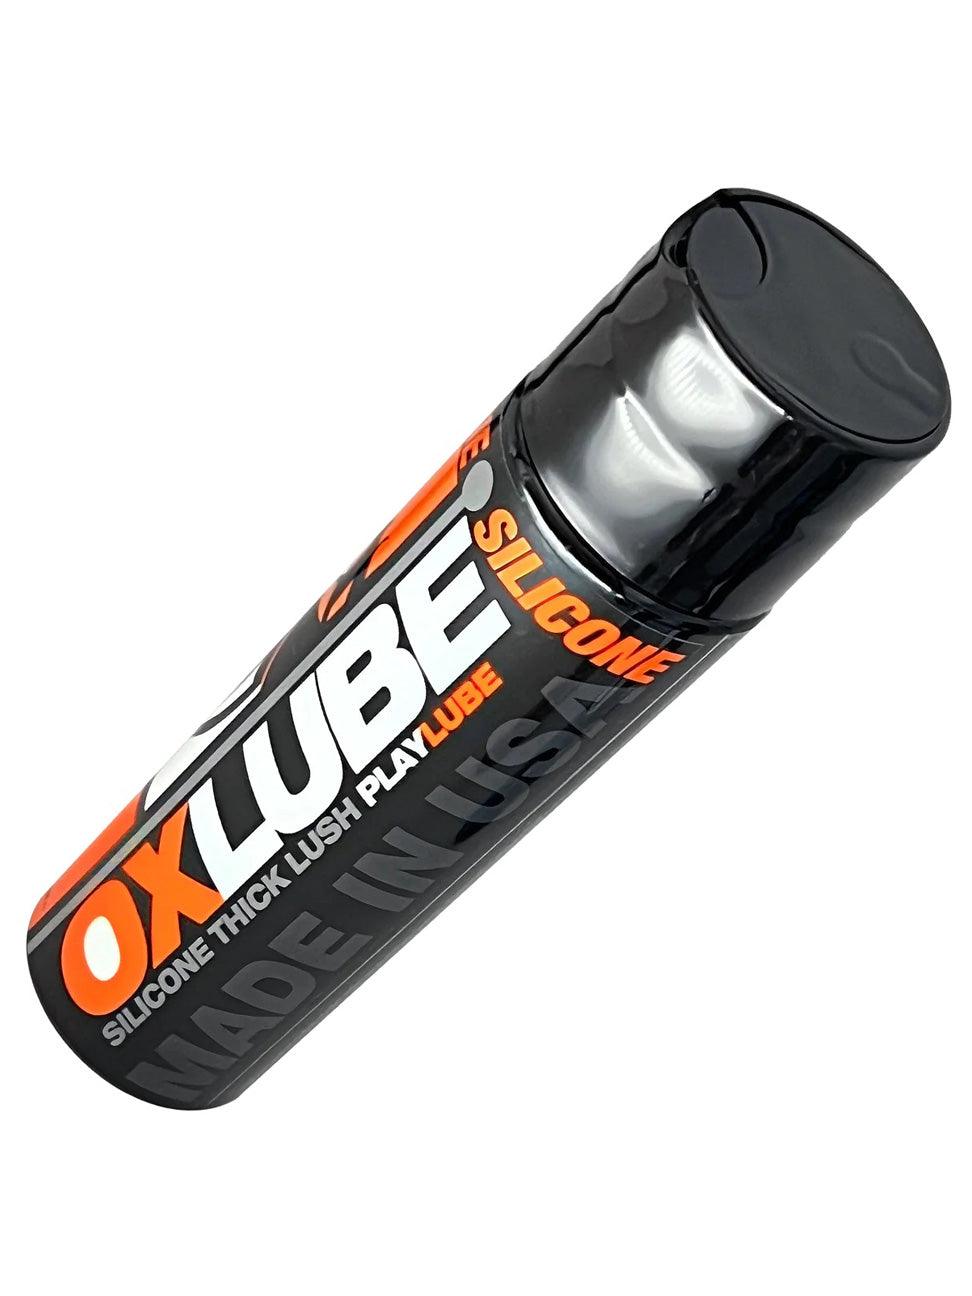 OXBALLS THICK SILICONE OXLUBE 4.4 oz - FullKit.com